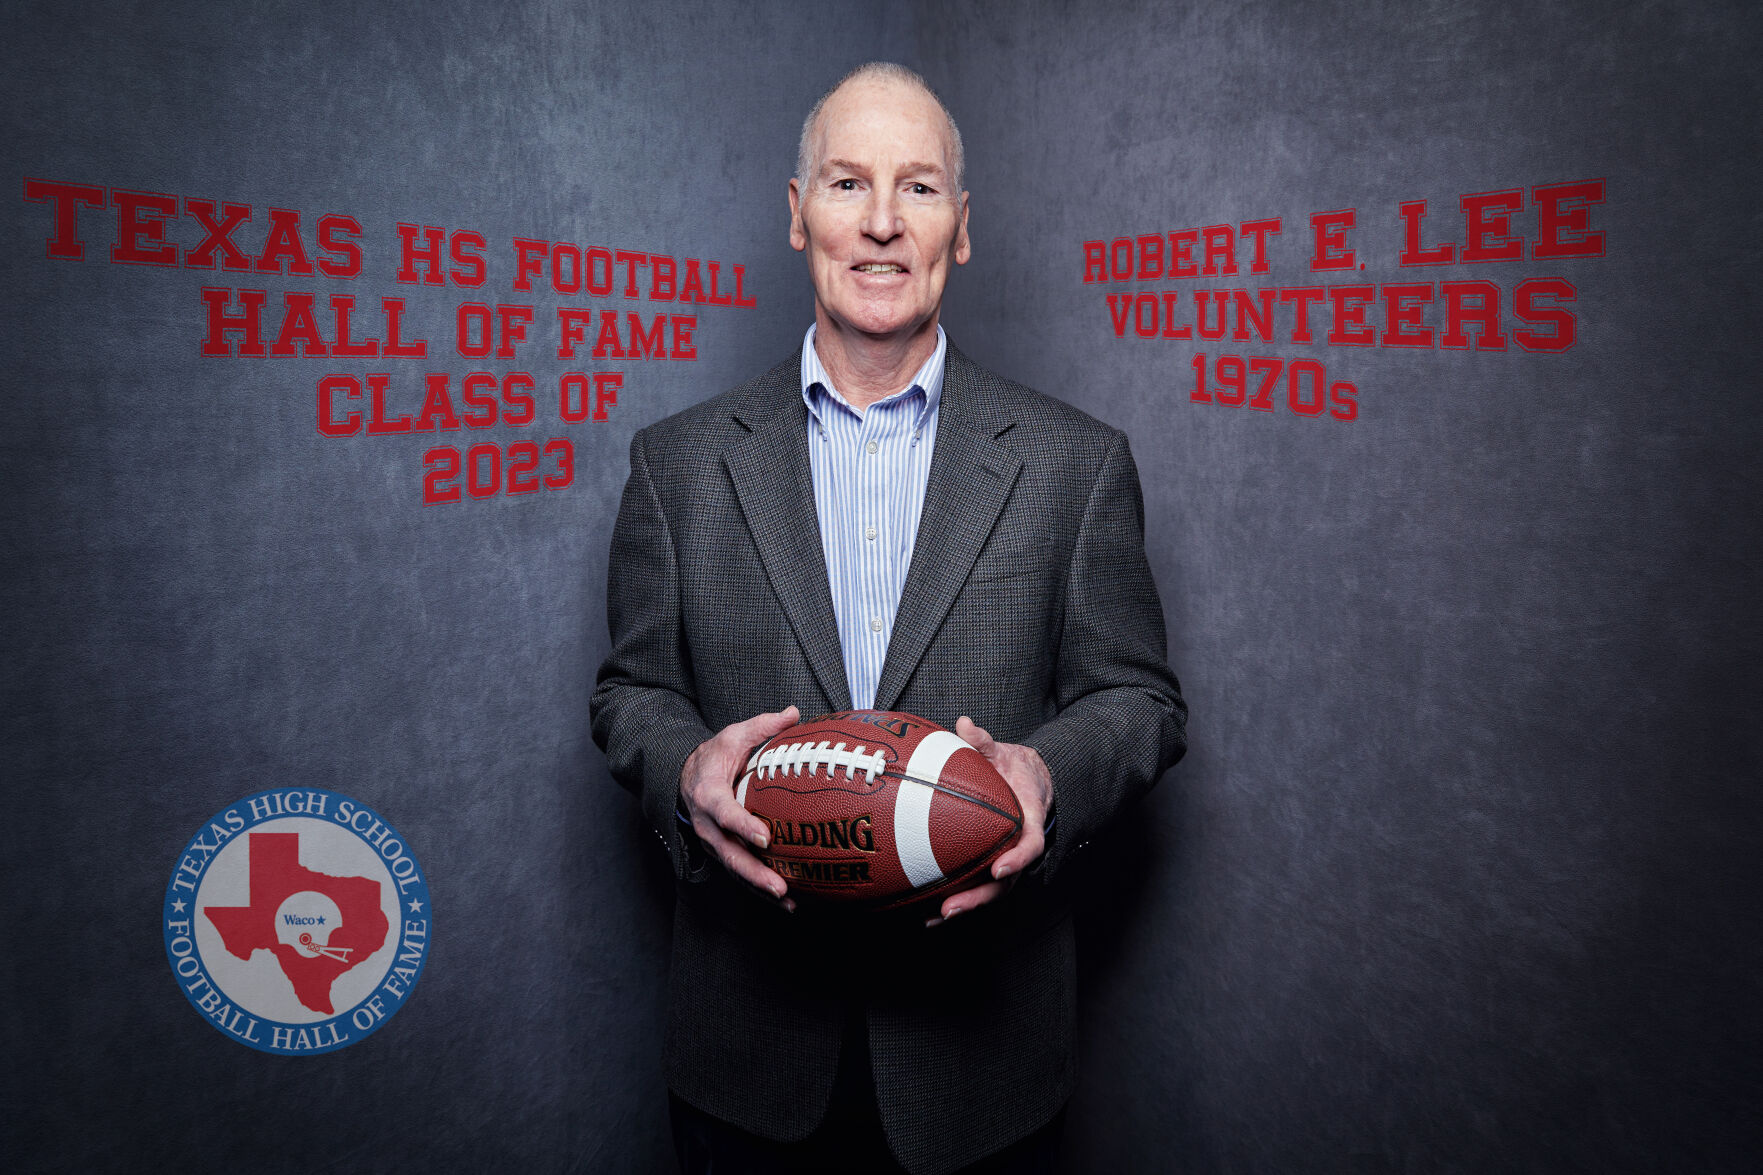 Texas High School Football Hall of Fame Rockett recalls living a dream with Lee football image